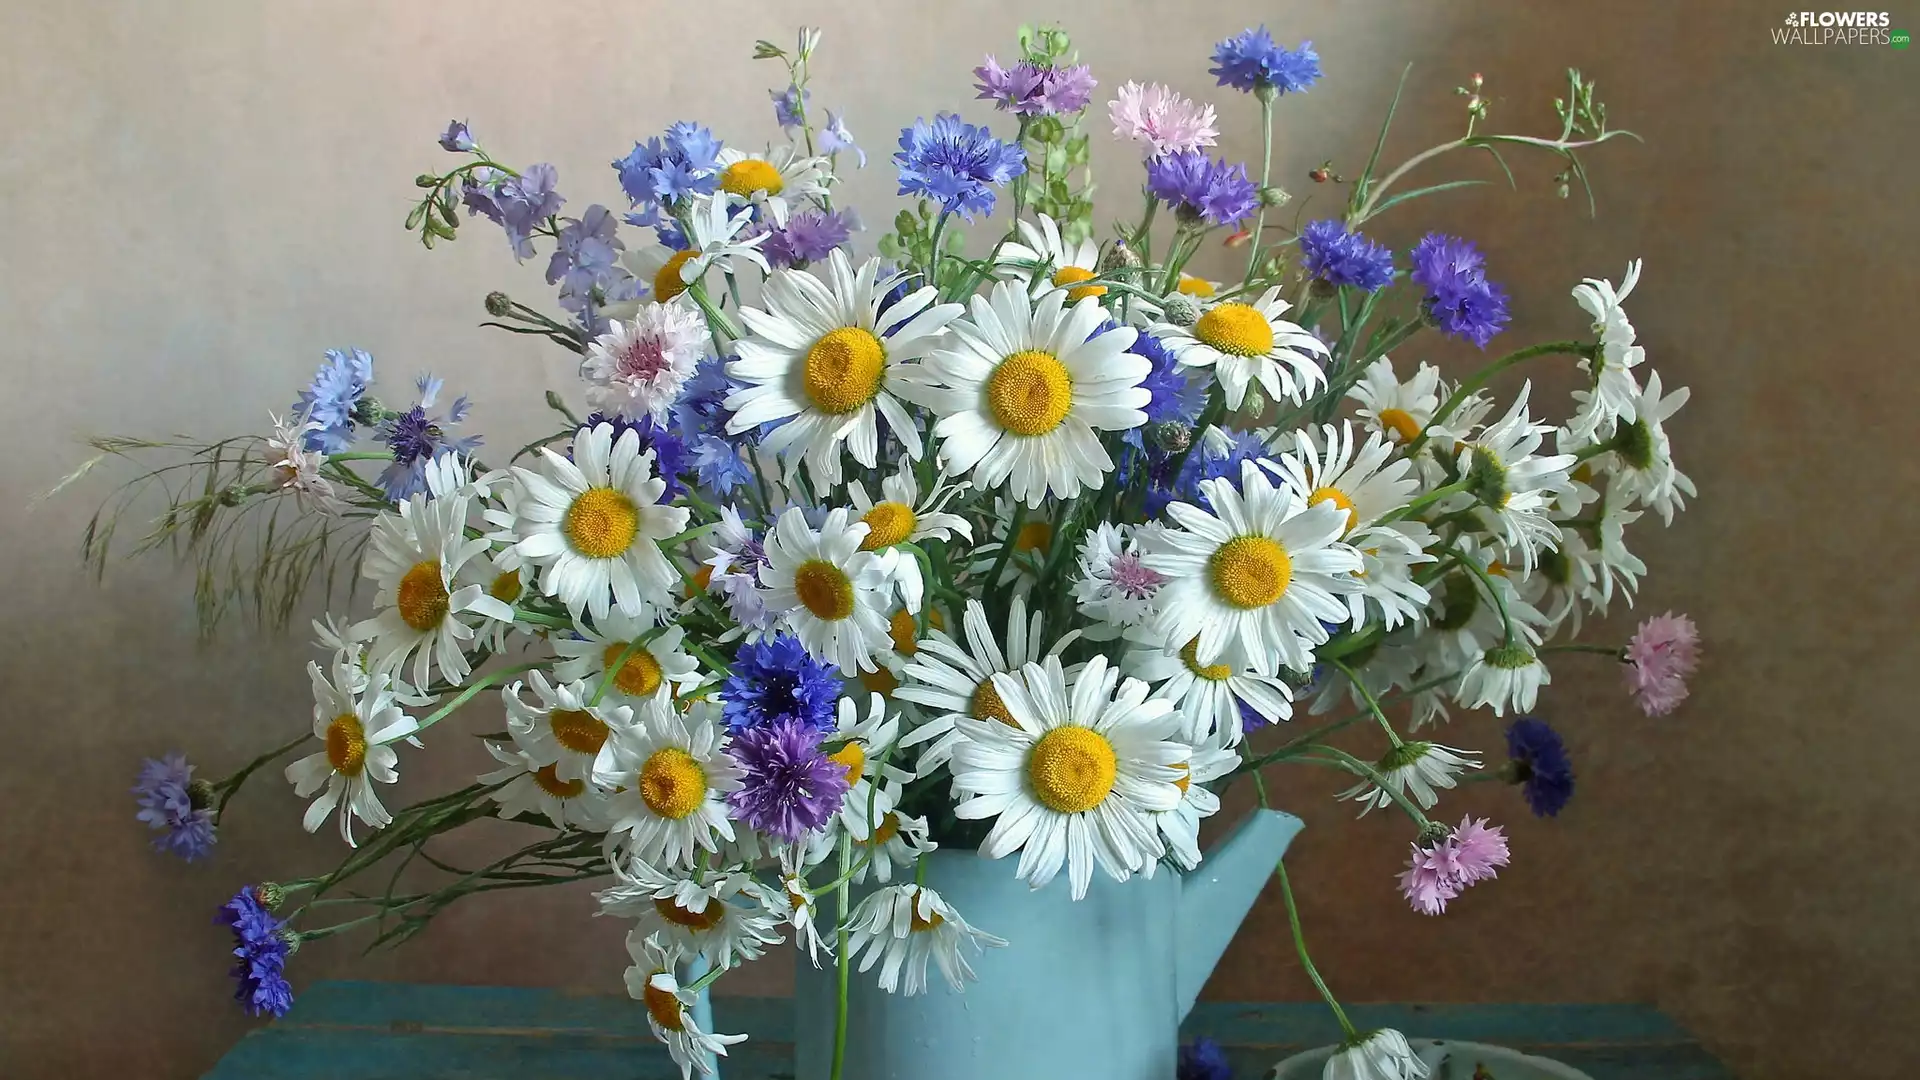 daisy, cornflowers, Flowers, Wildflowers, bouquet